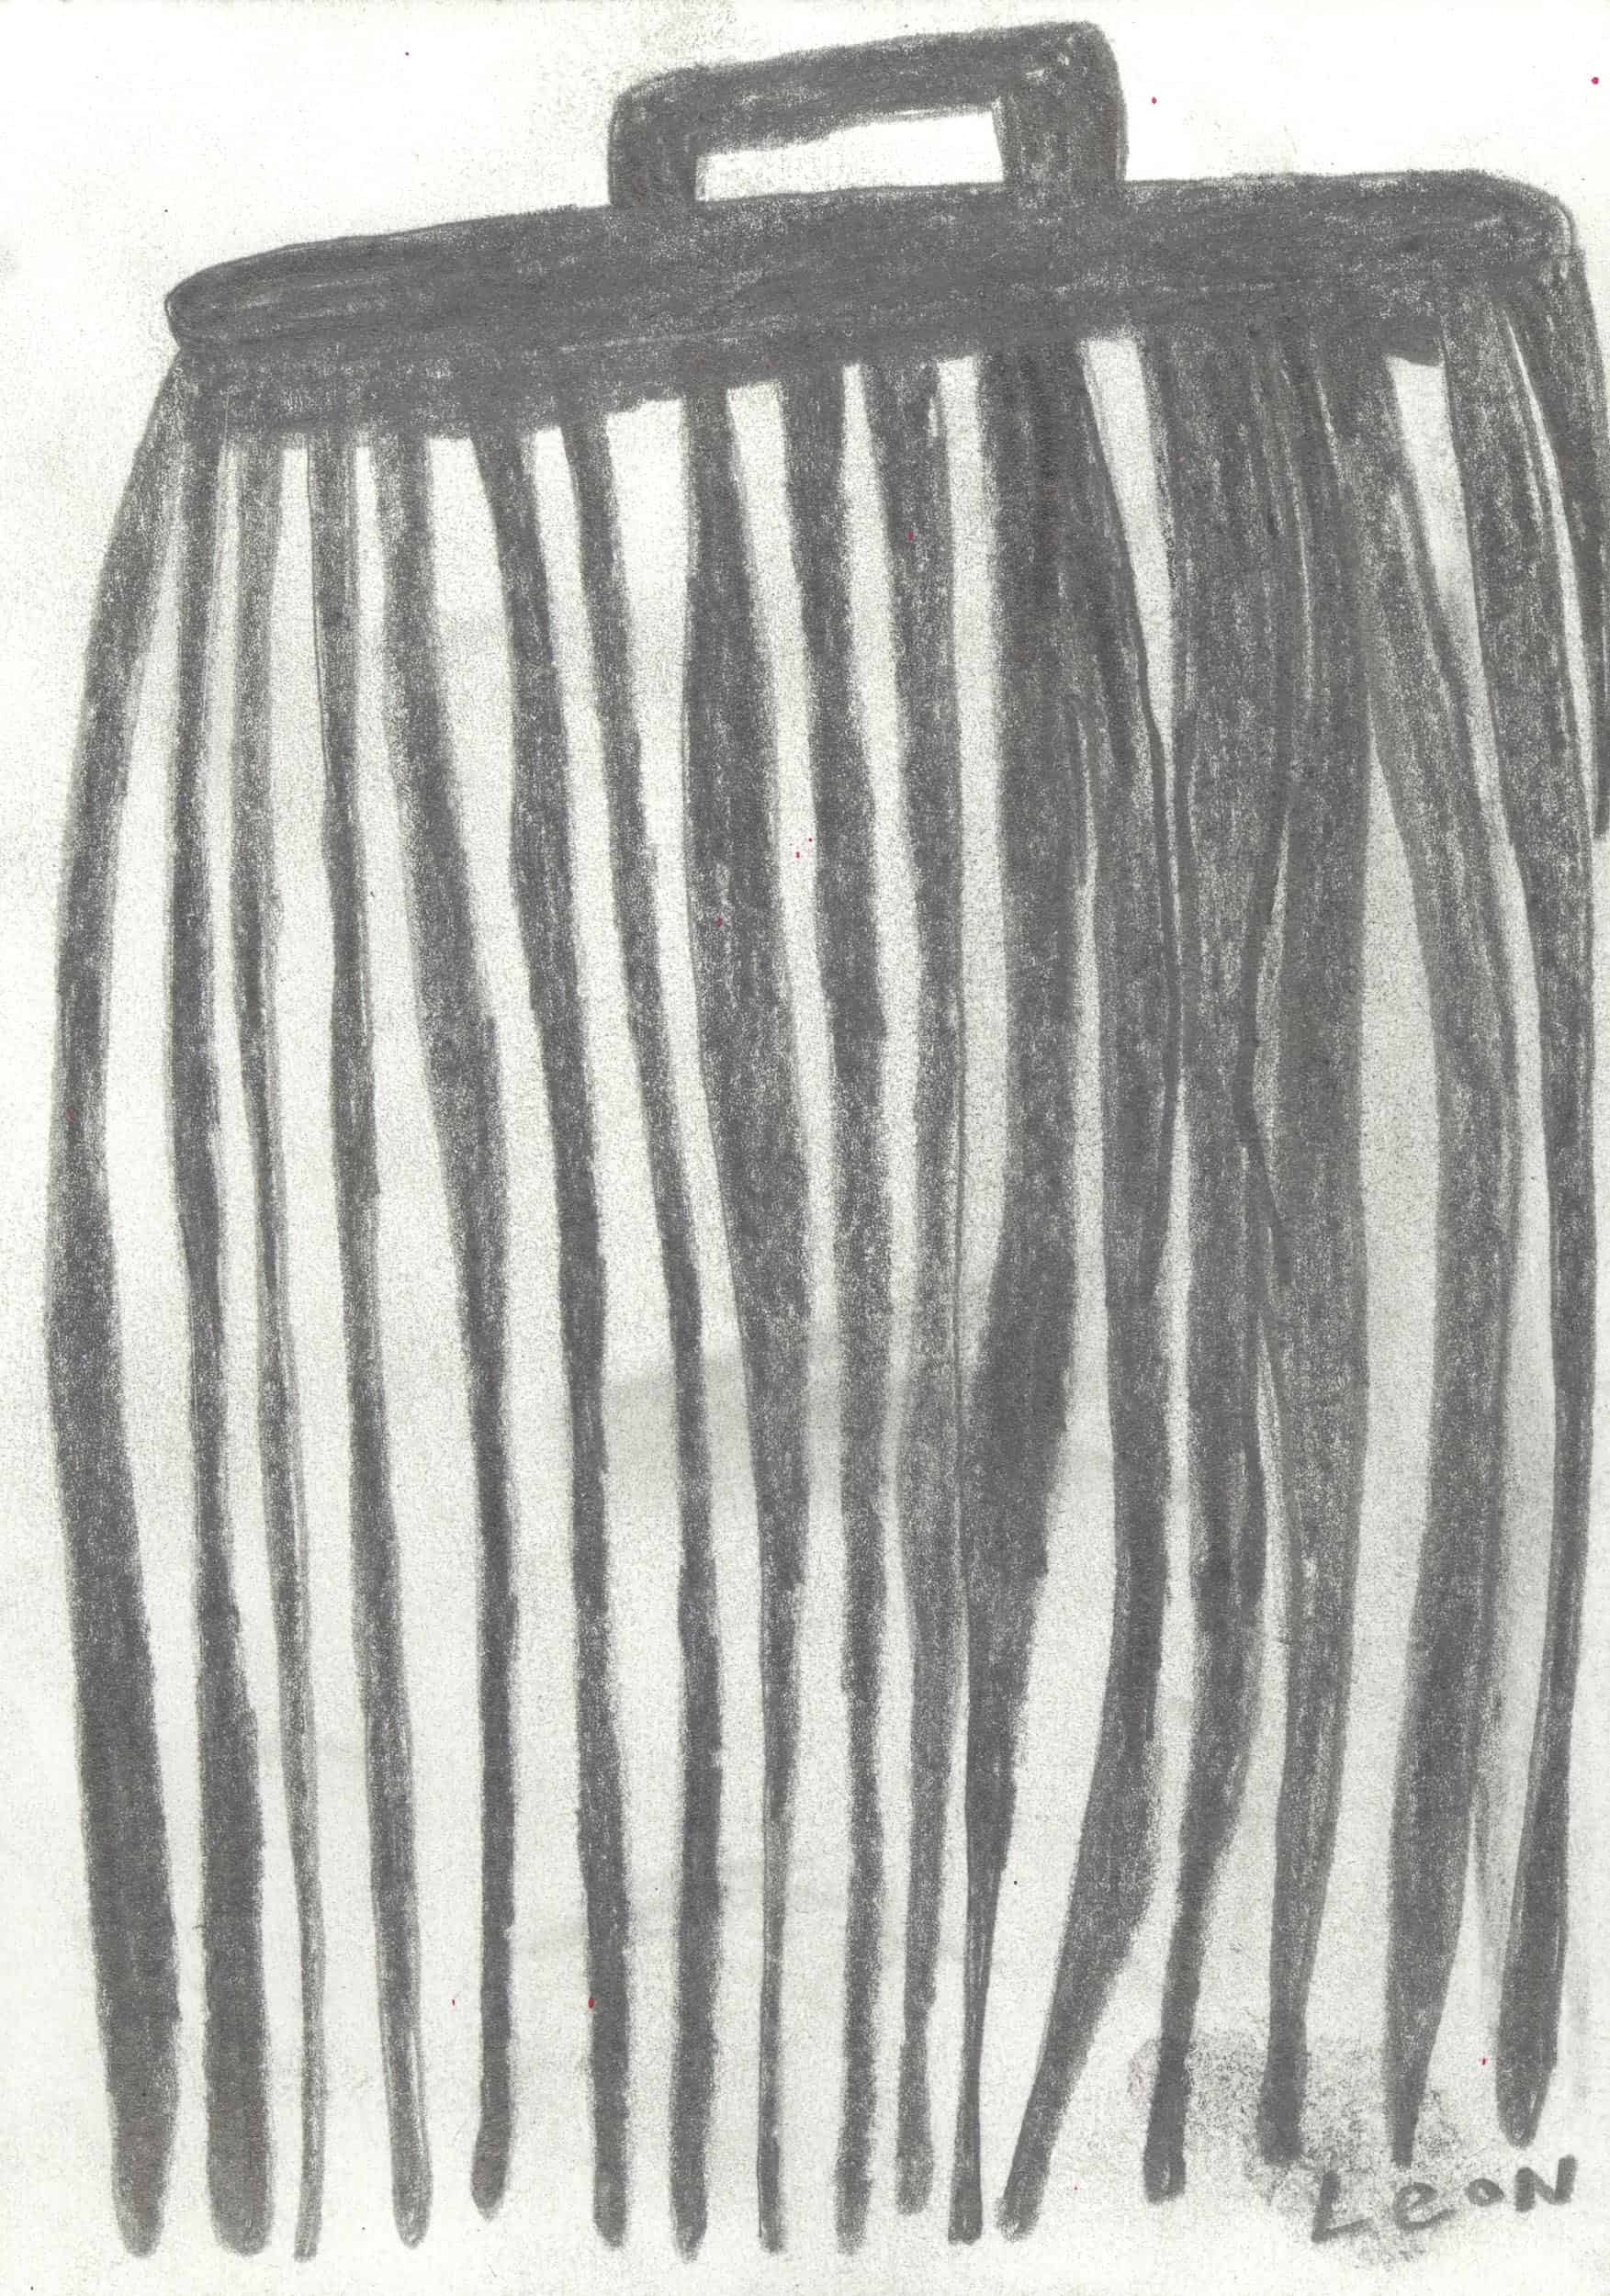 fink leonhard - Der Kamm für lange Haare! / The comb for long hair!